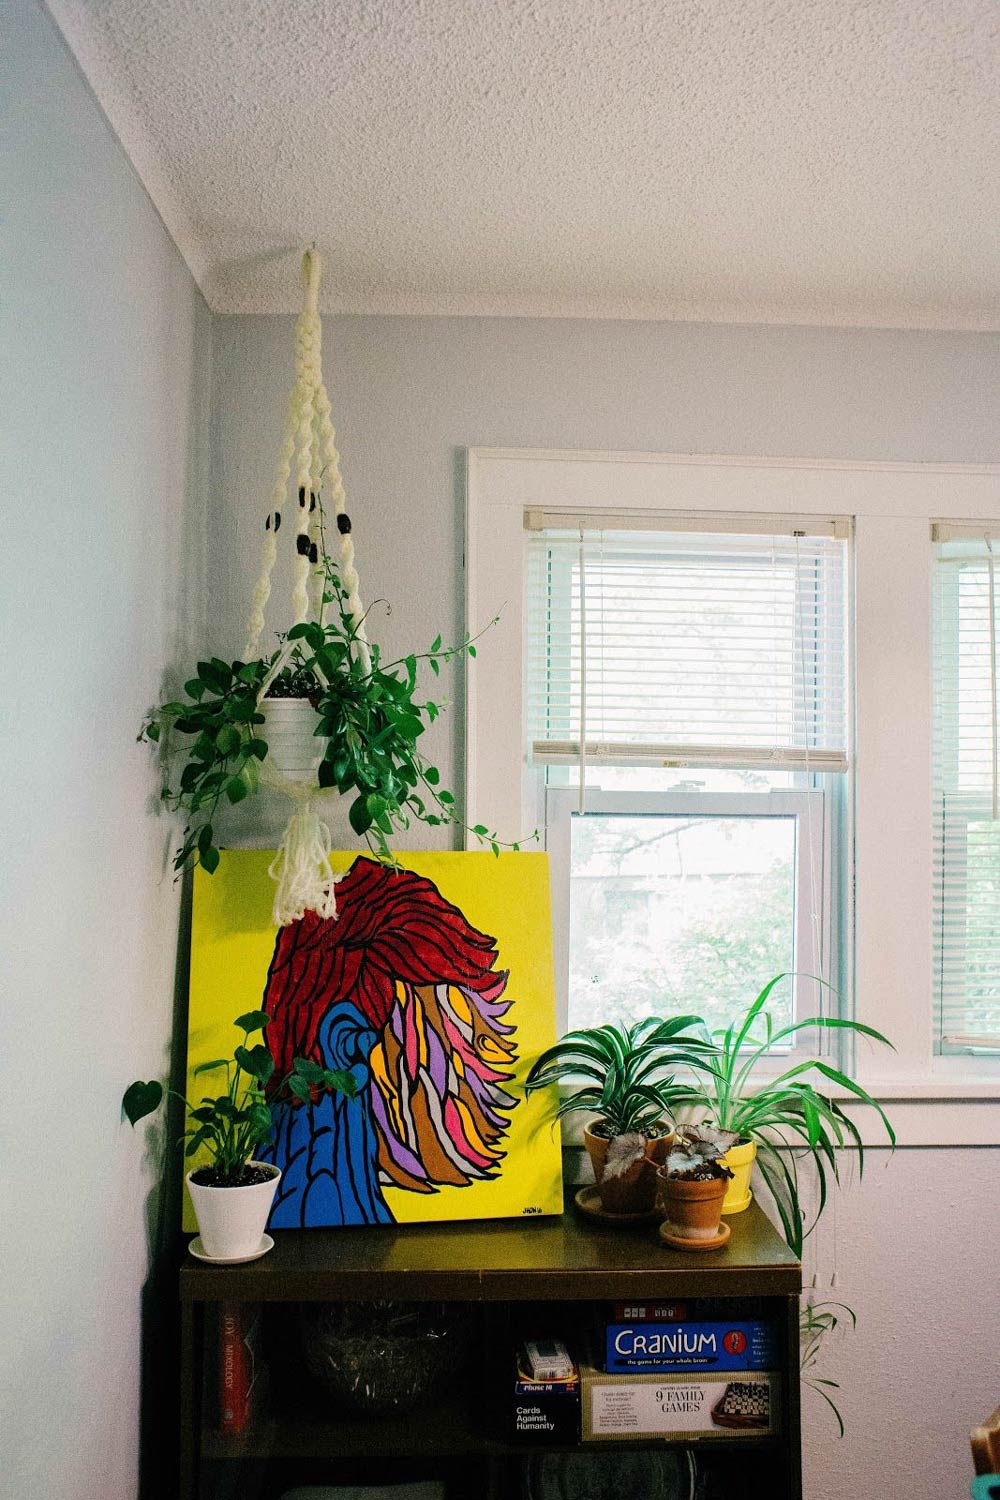 Hanging plant near dresser with art